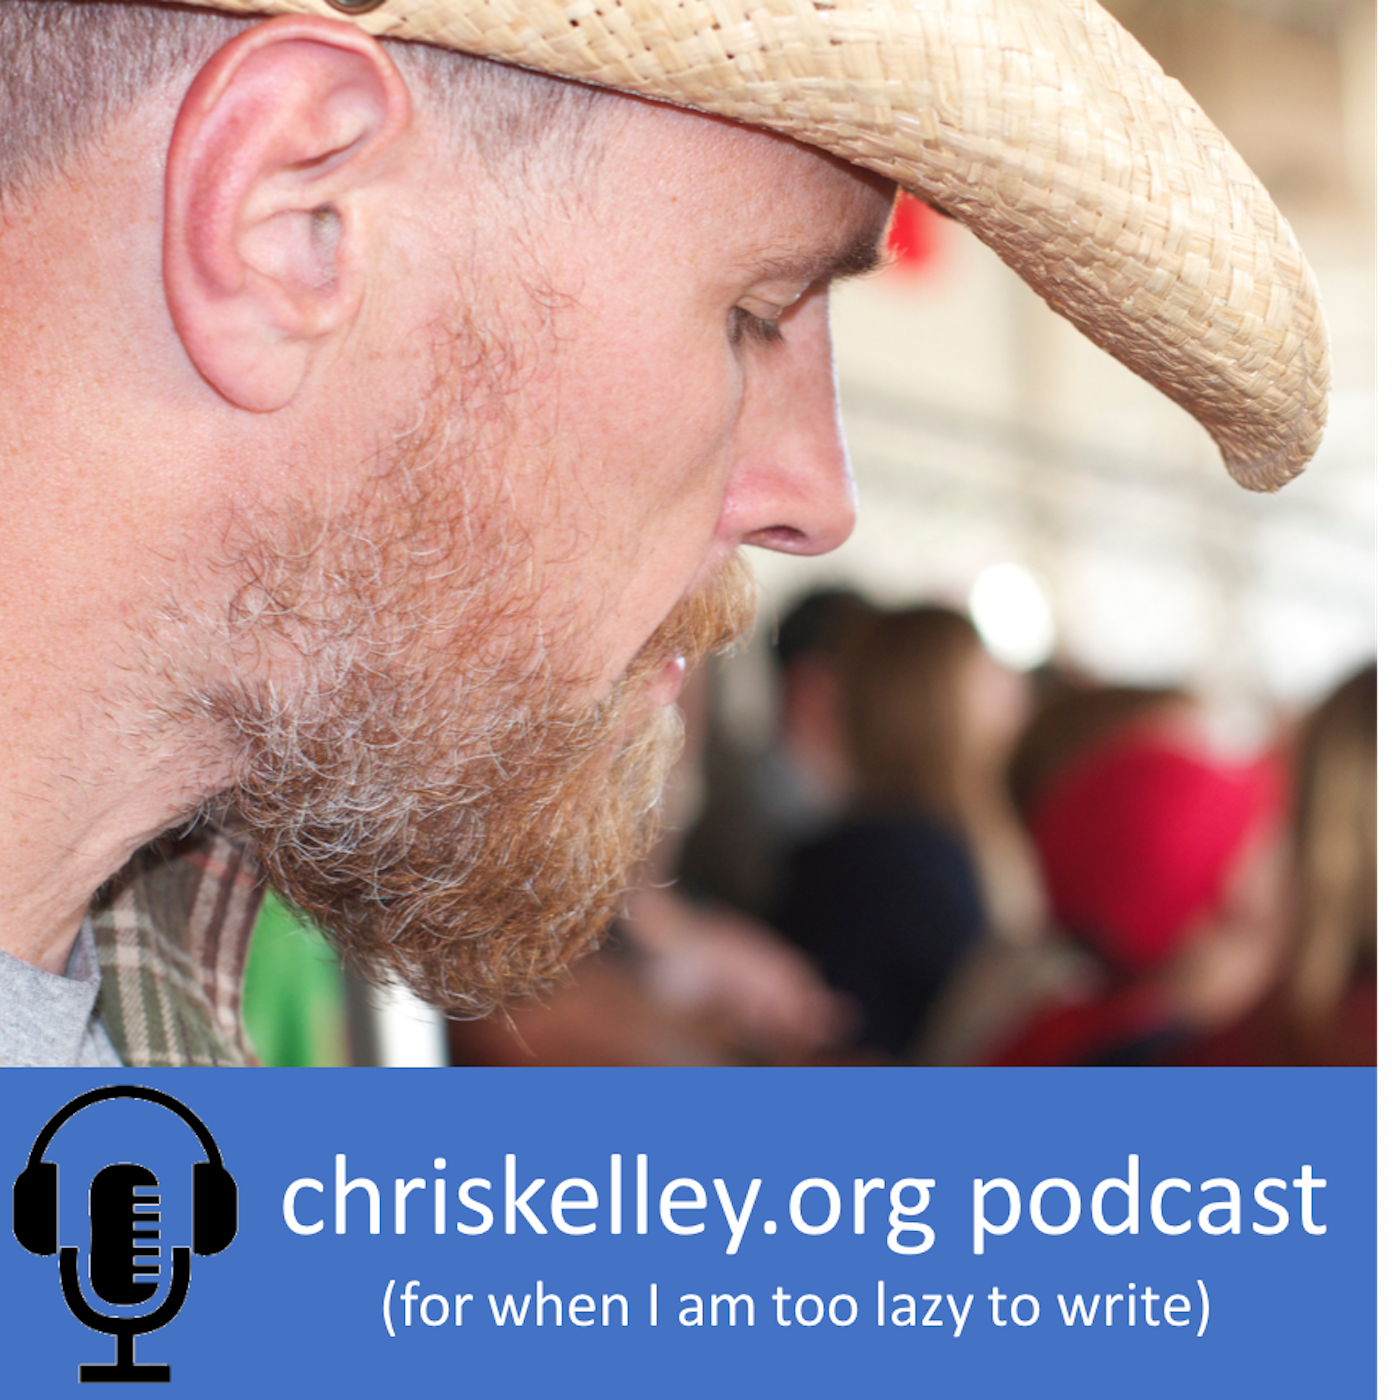 chriskelley.org Podcast